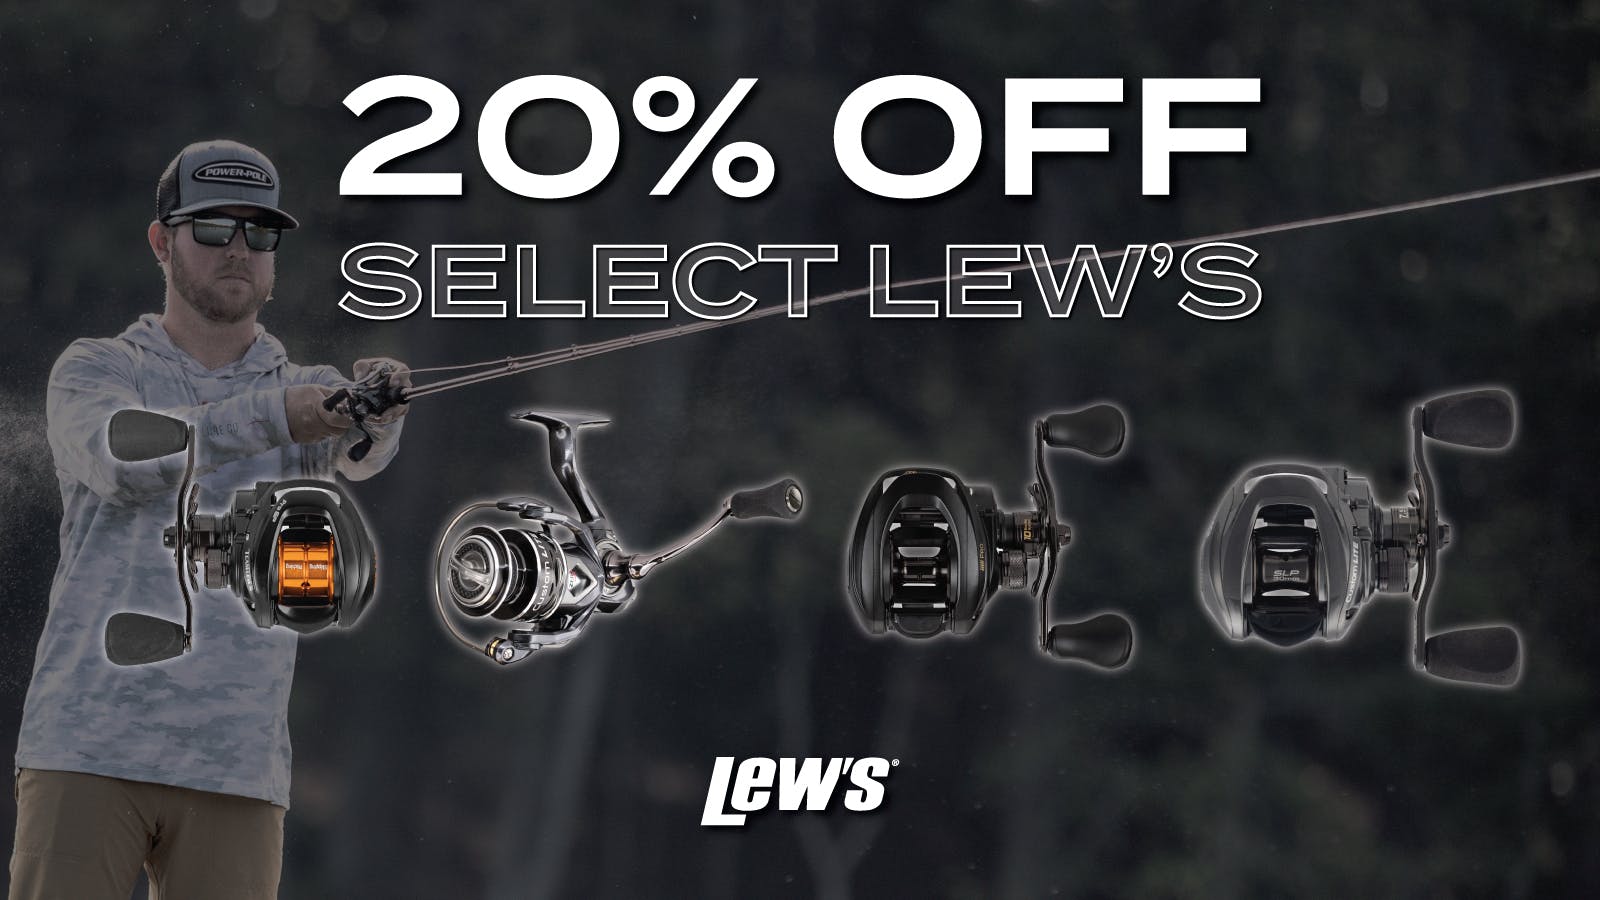 Hot Deals on Select Lew's Reels